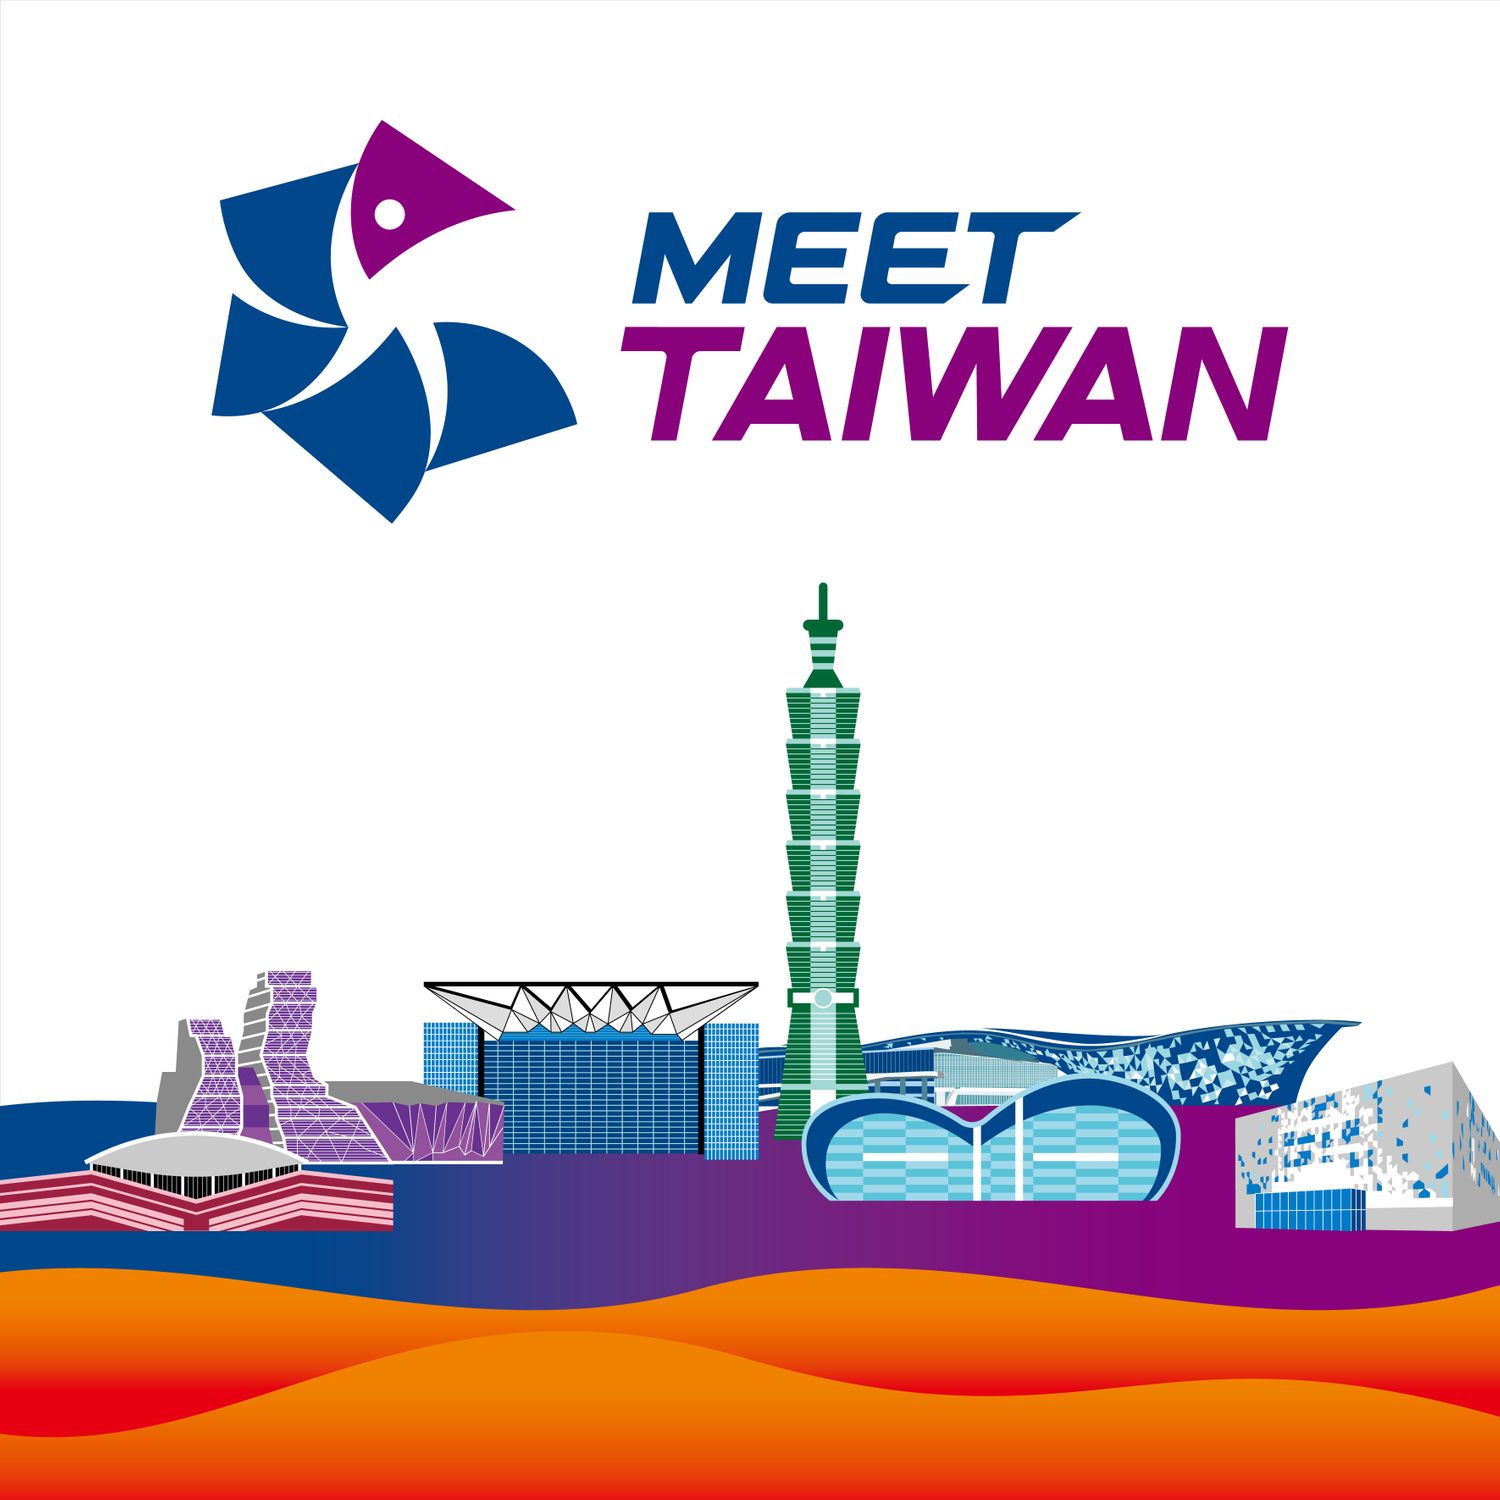 MEET TAIWAN